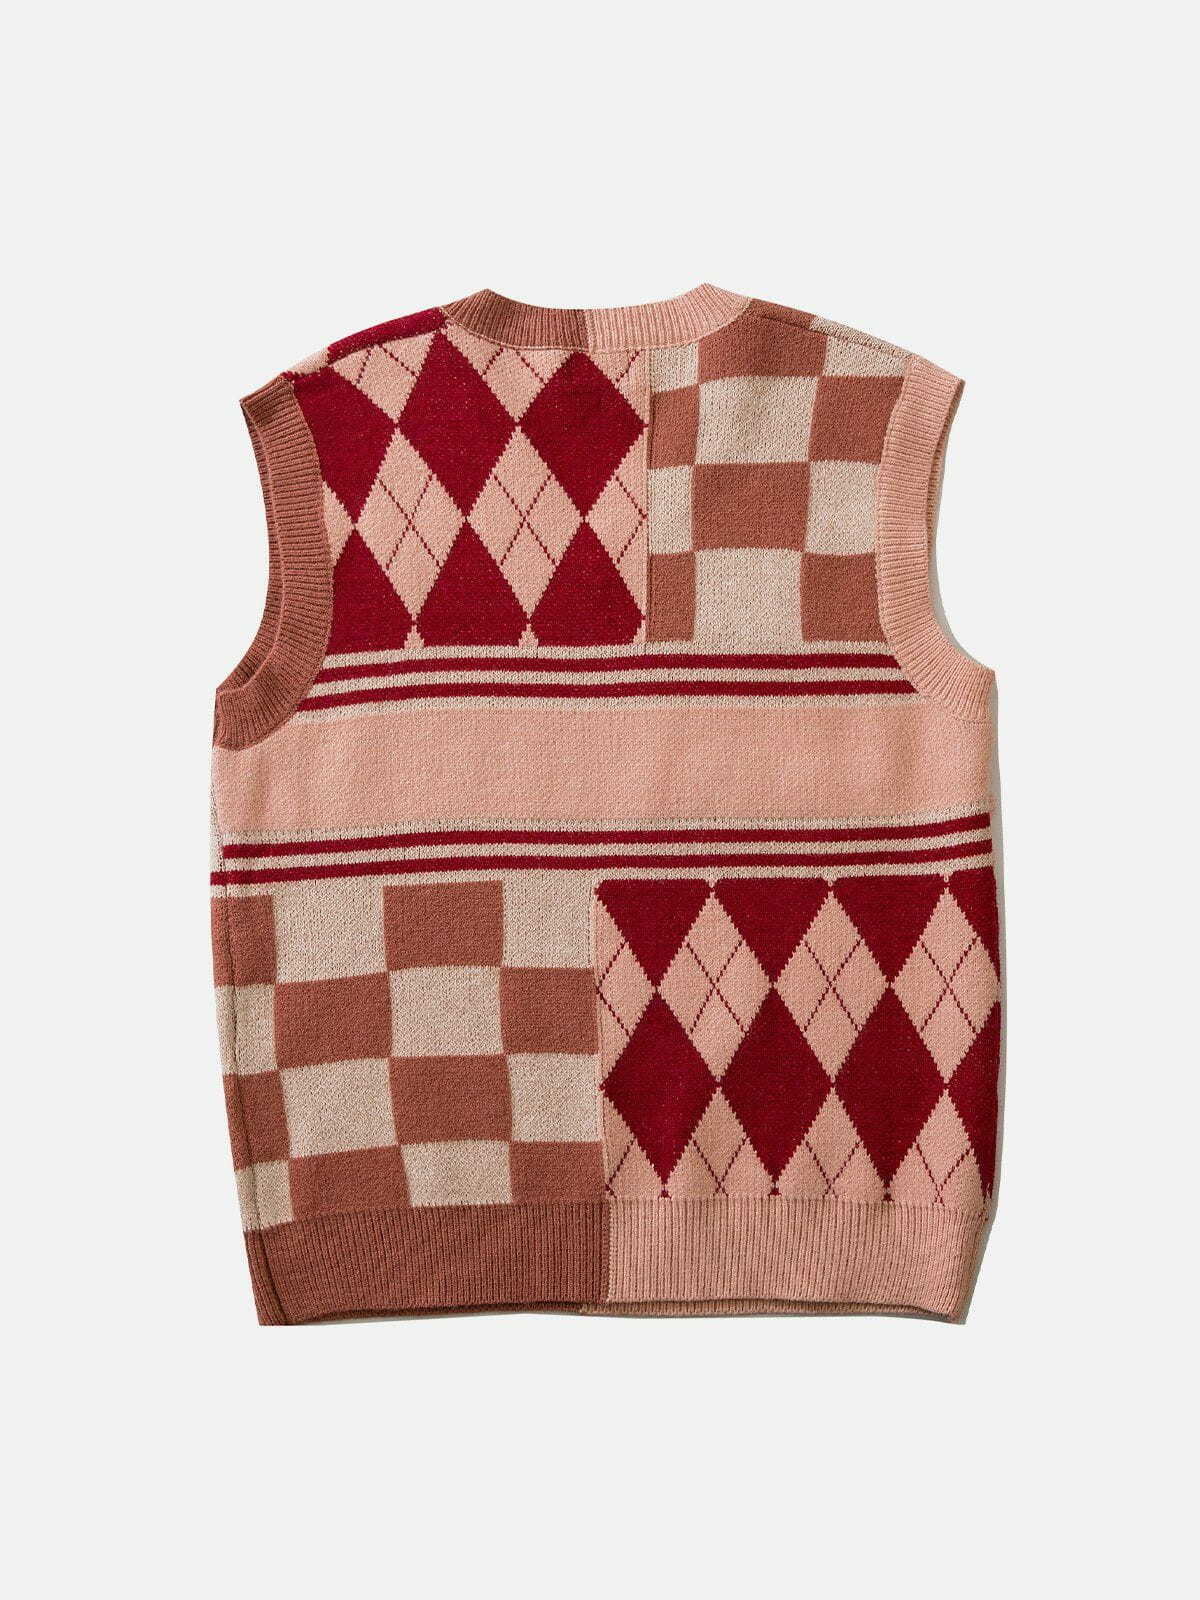 revolutionary layering sweater vest edgy  retro streetwear essential 8547